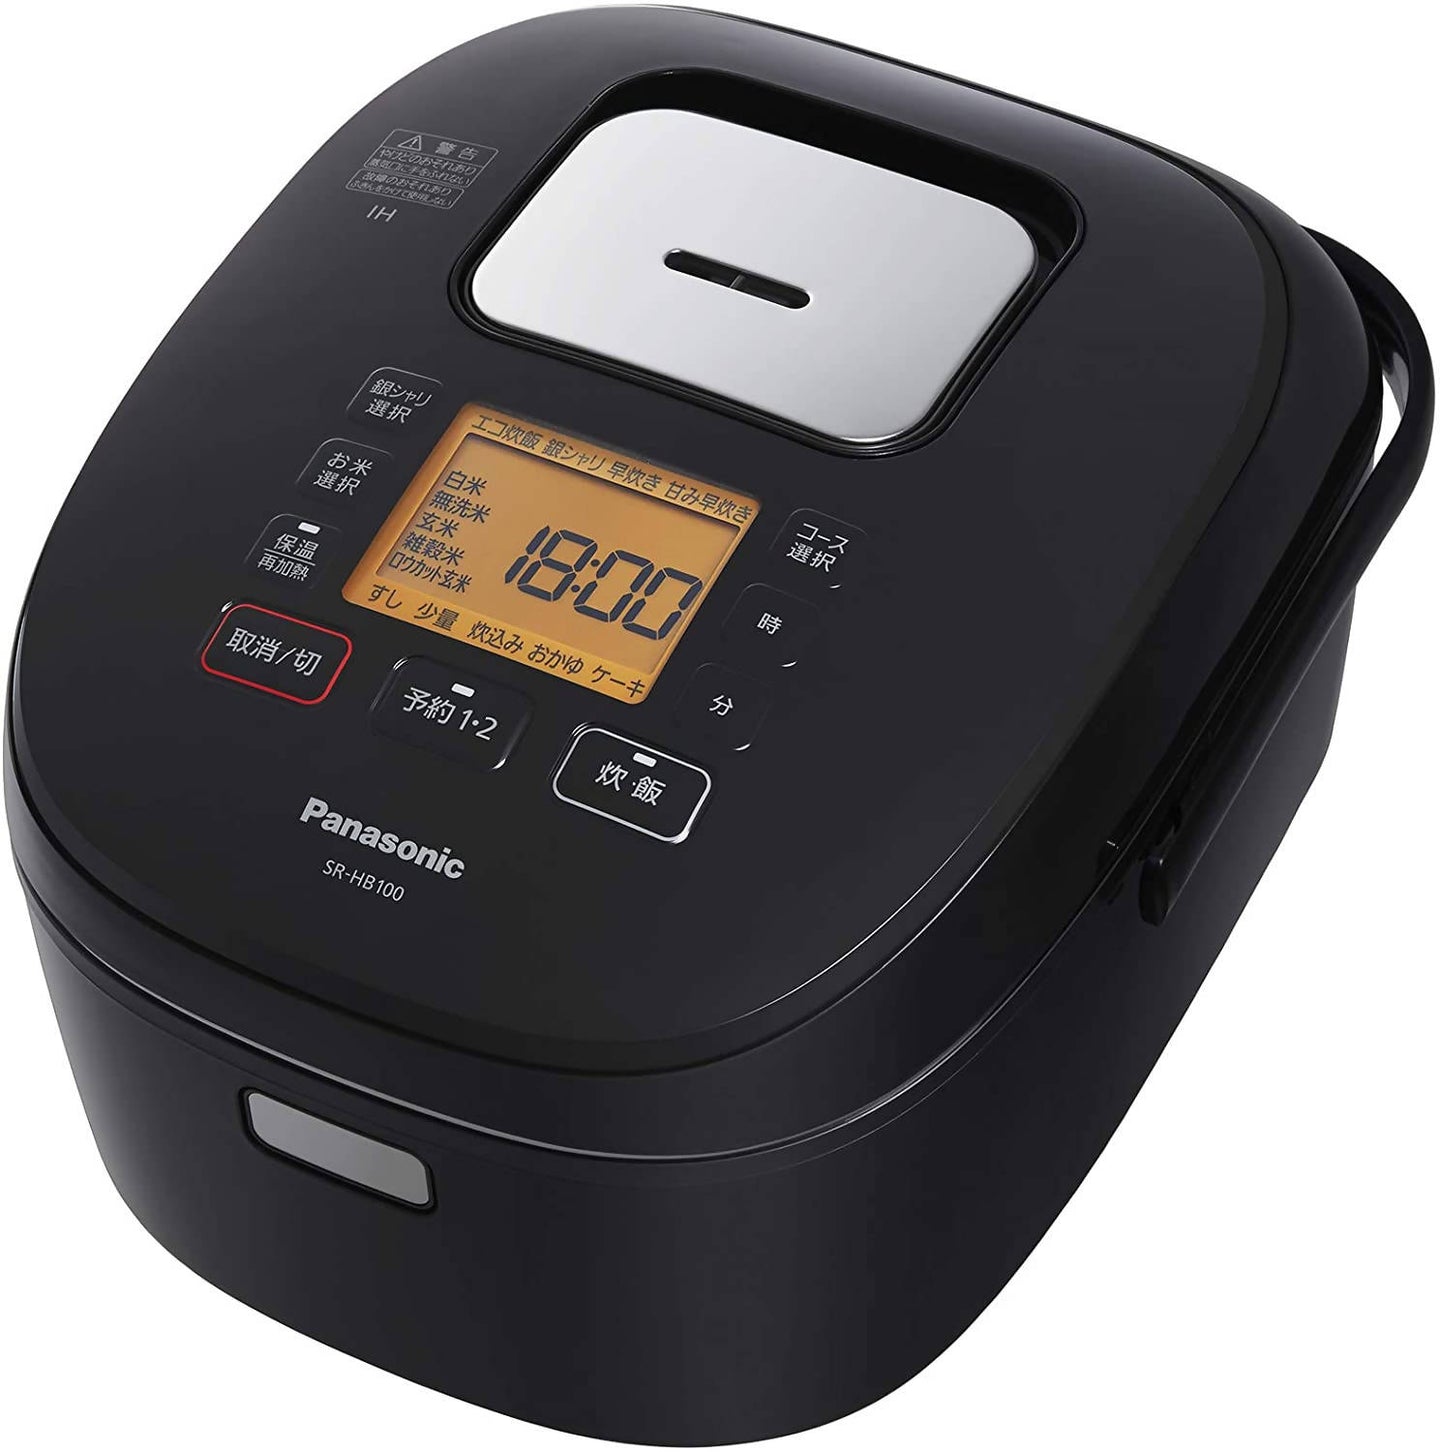 Panasonic SR-HB100-K 5-Stage IH (Induction Heating) Rice Cooker – 5.5 Go Capacity – Black